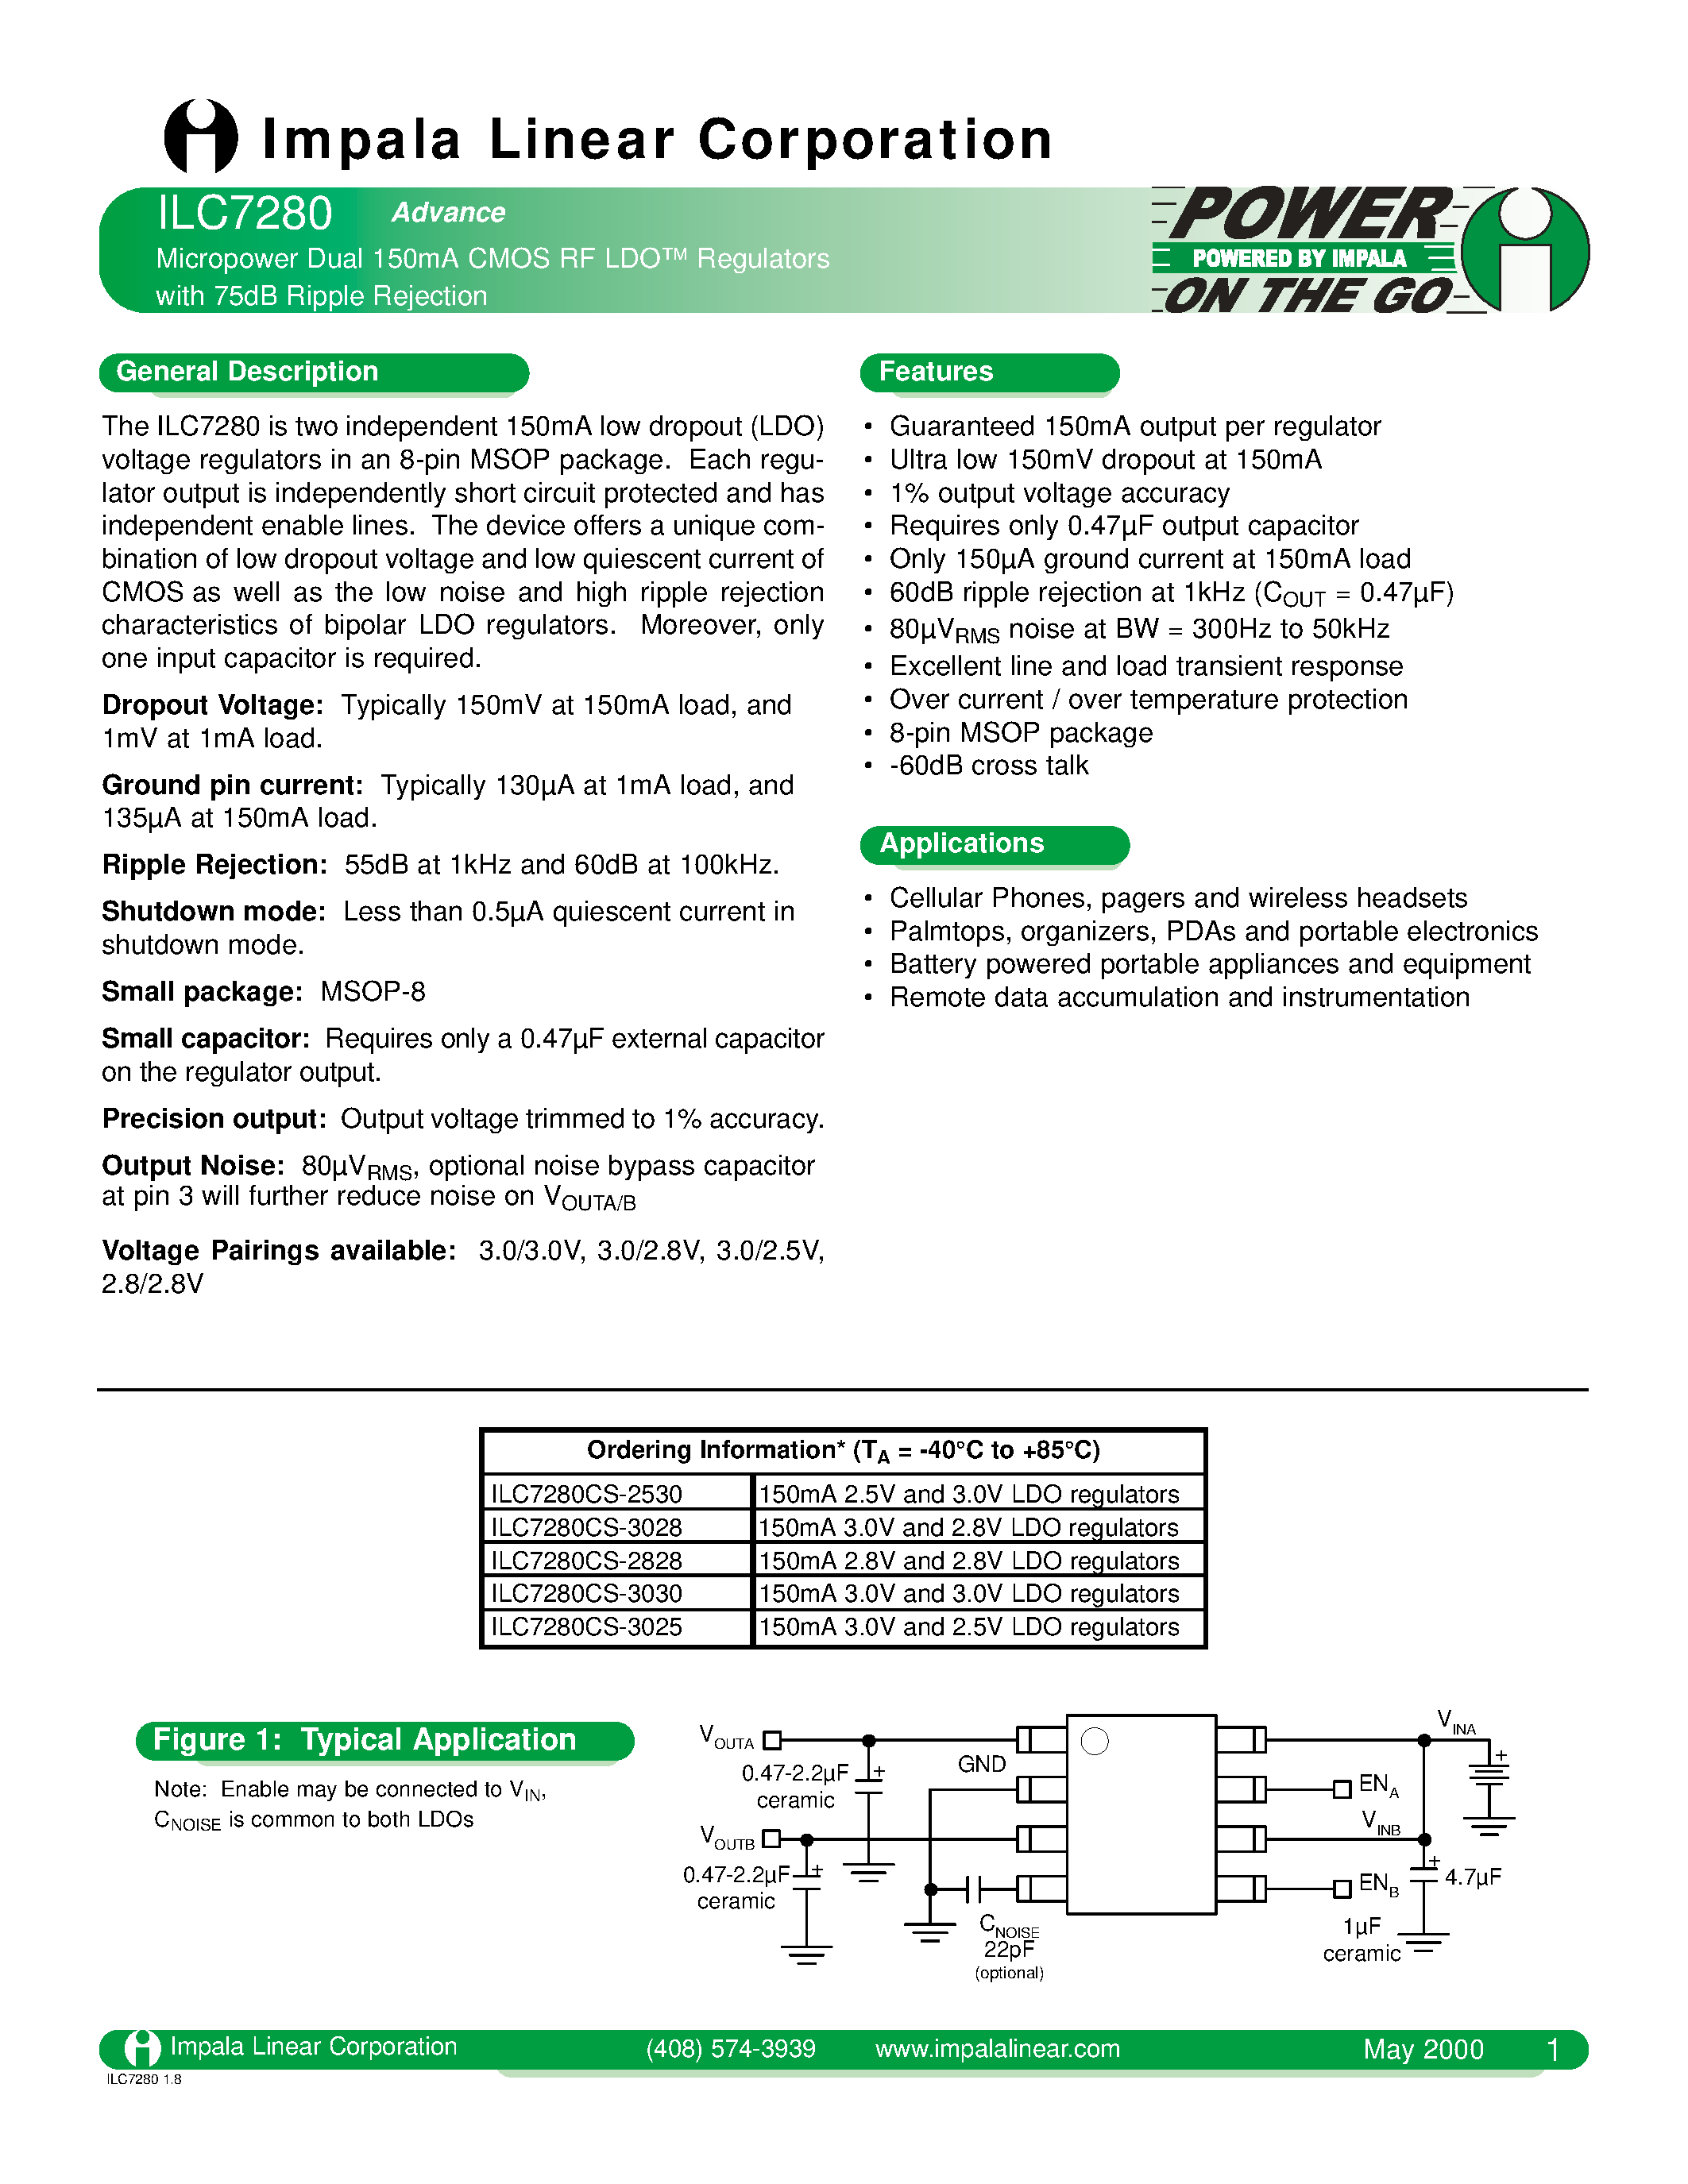 Datasheet ILC7280CS-3028 - MICROPOWER DUAL 150MA CMOS RF LDO REGULATORS WITH 75DB RIPPLE REJECTION page 1